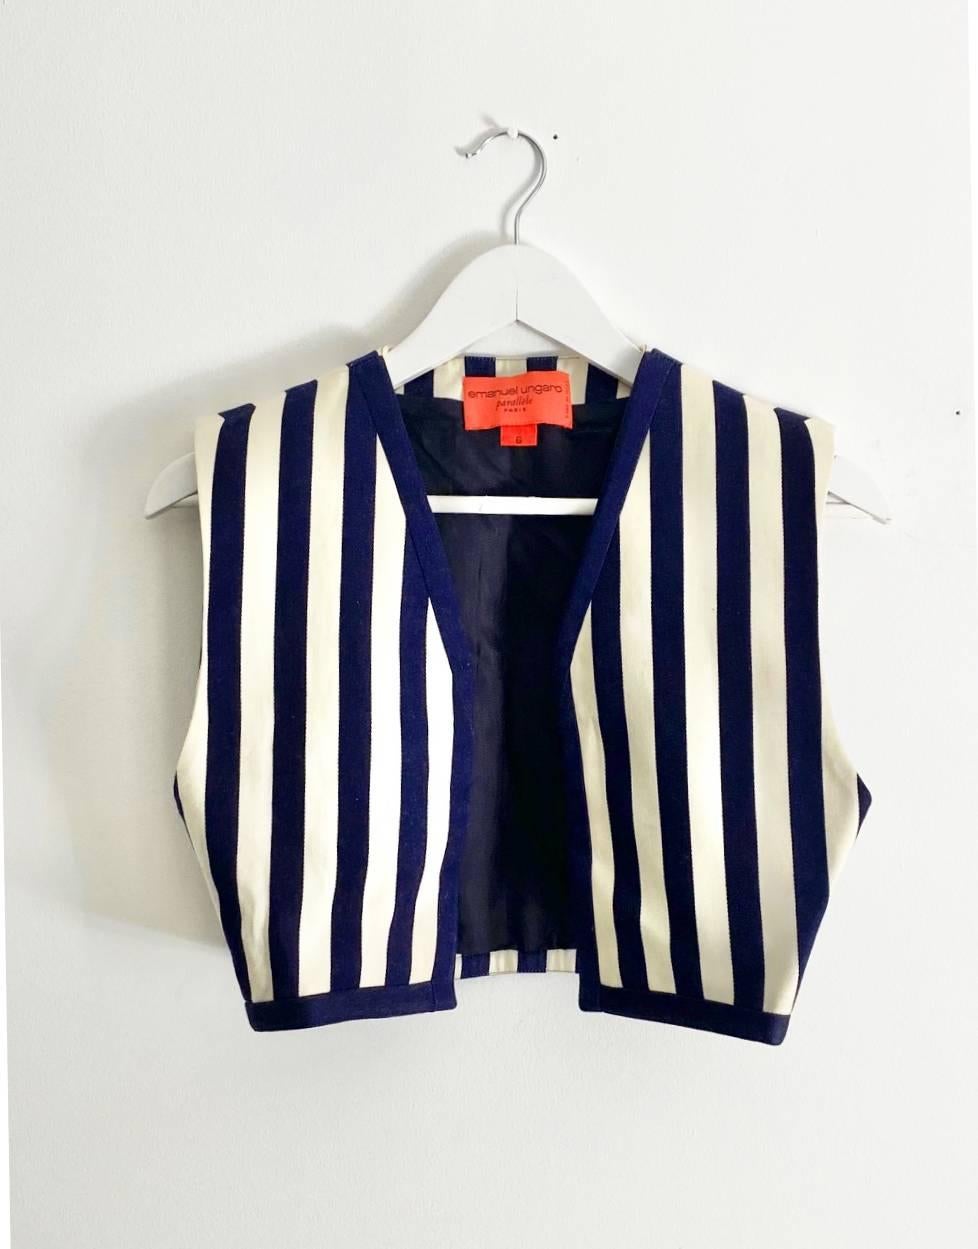 Emmanuel Ungaro cropped sleeveless cropped waistcoat, Navy Blue and Ivory vertical stripe print, silk lining

Size: 40 IT /  8 UK /  0-2 USA 

Measurements: 
- shoulder to shoulder: 39cm / 15.3'
- armpit to armpit: 48cm / 18.8'
- waist - side to